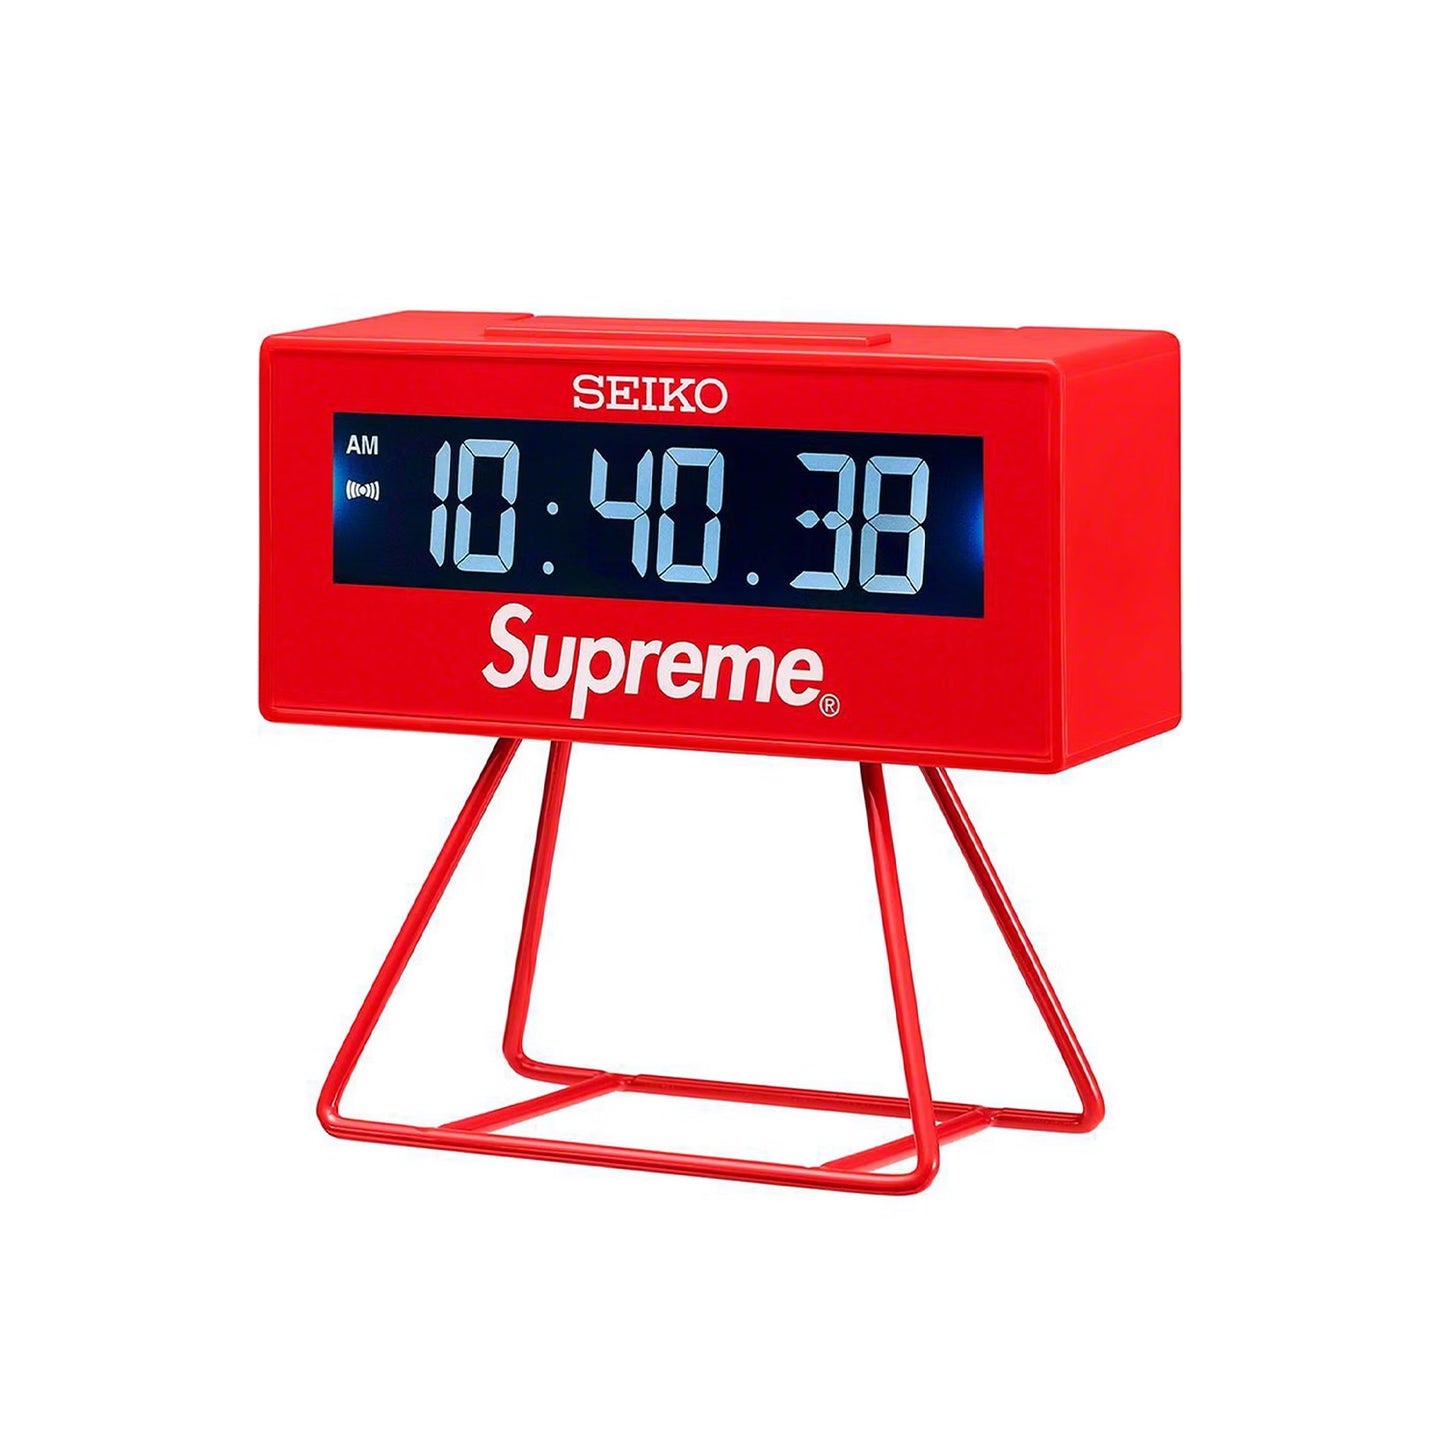 Supreme Seiko Marathon Clock Red (C)